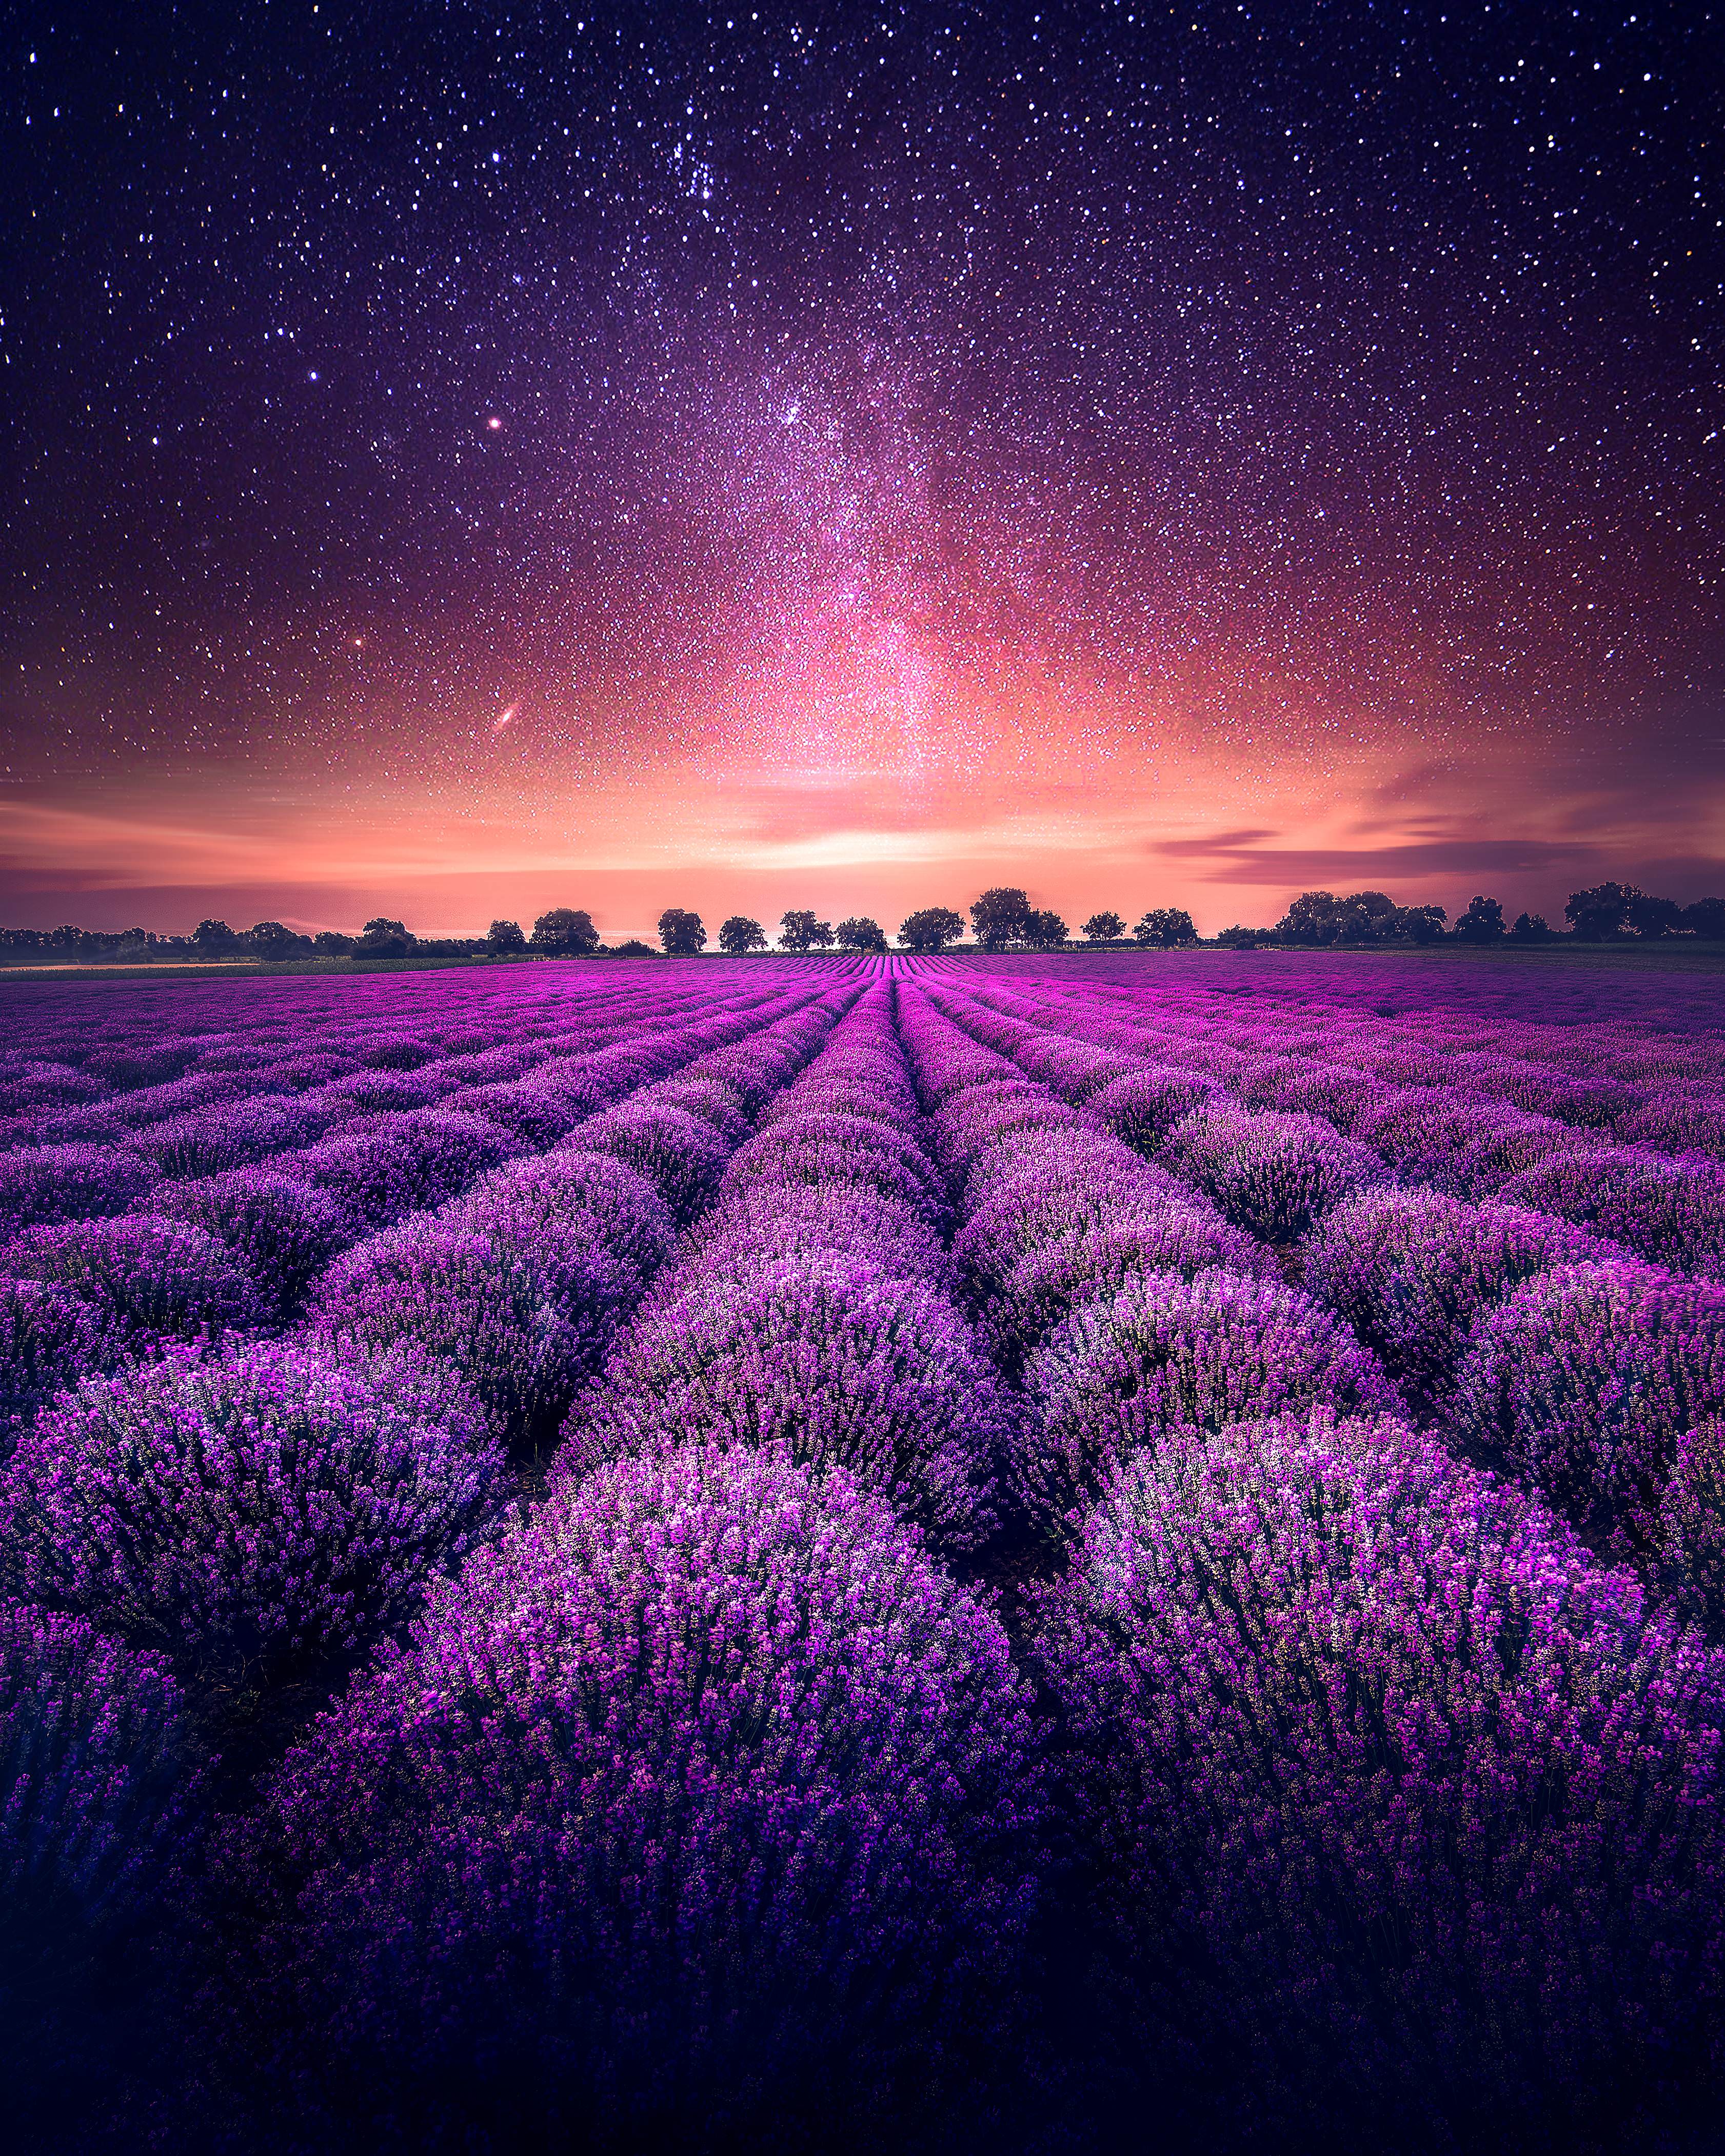 Popular Lavender Image for Phone